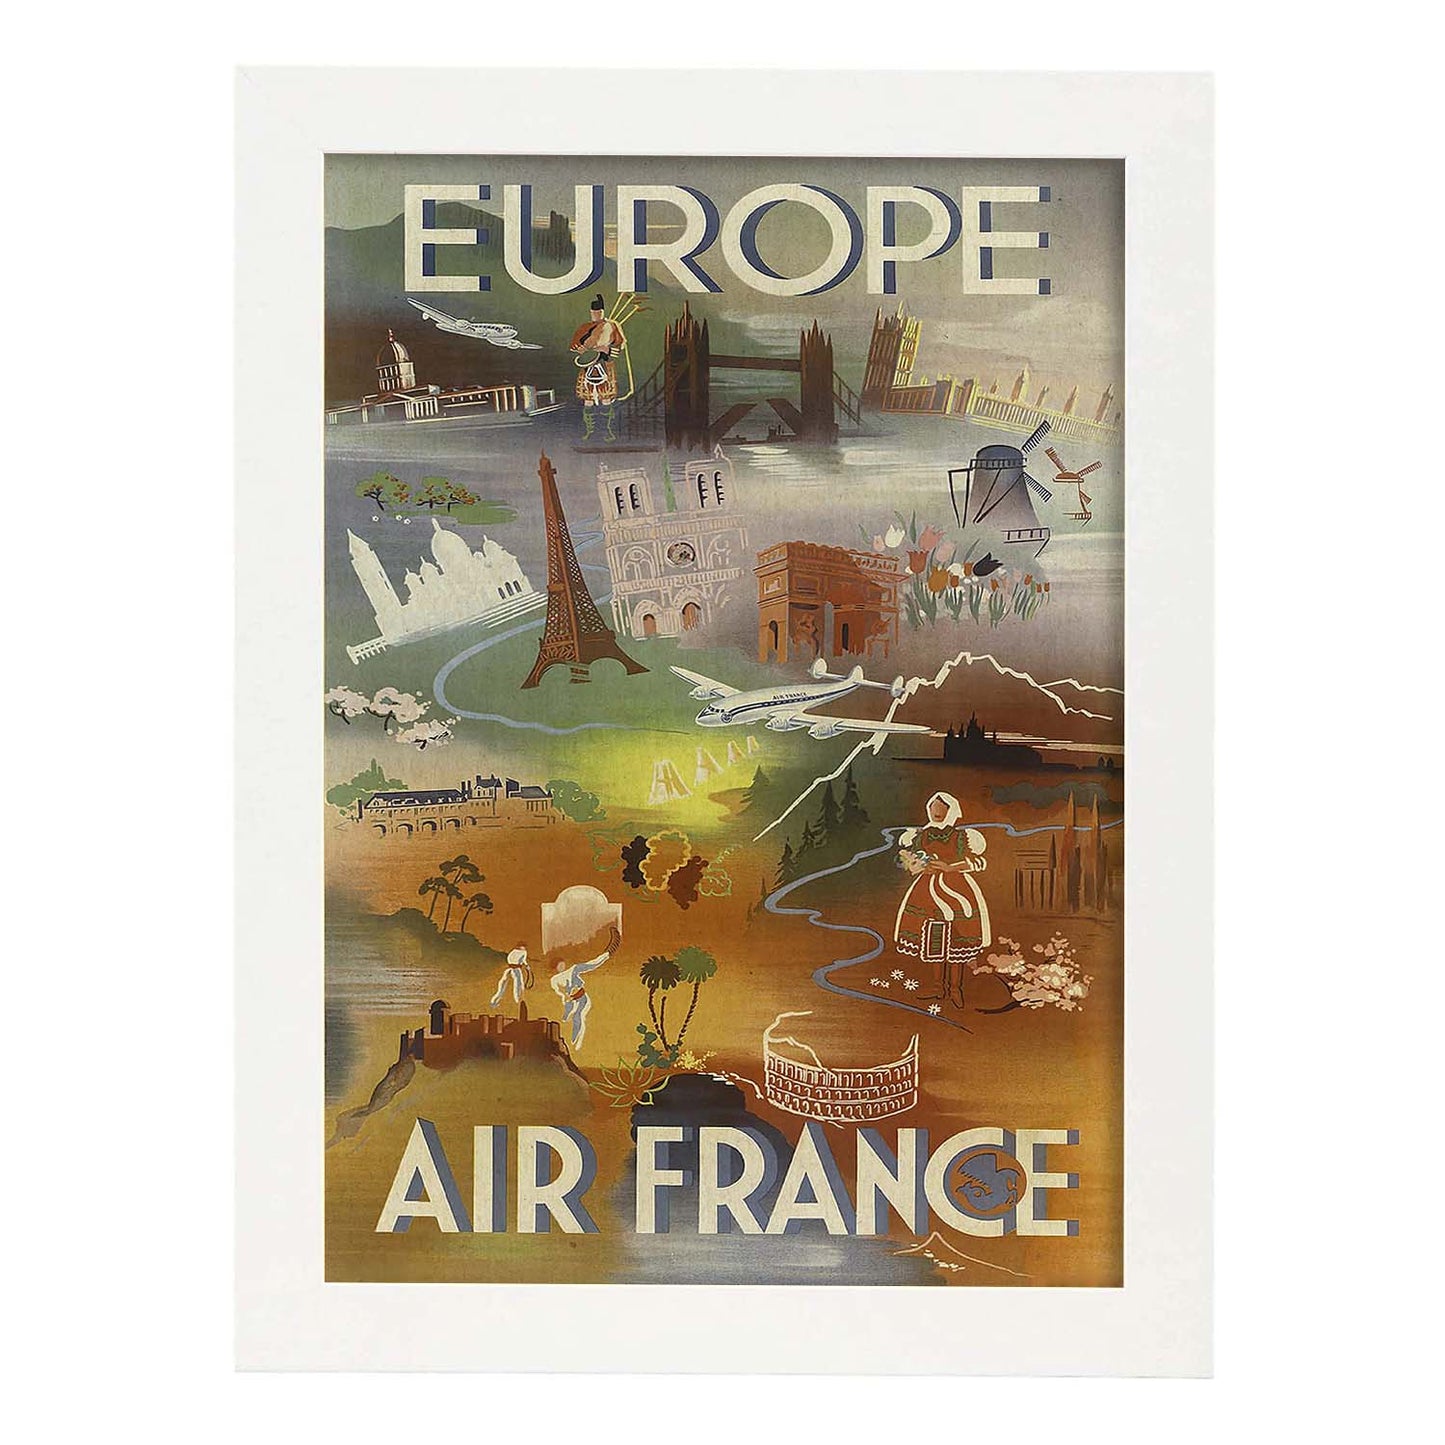 Poster vintage. Cartel vintage de Europa. Air France.-Artwork-Nacnic-A4-Marco Blanco-Nacnic Estudio SL